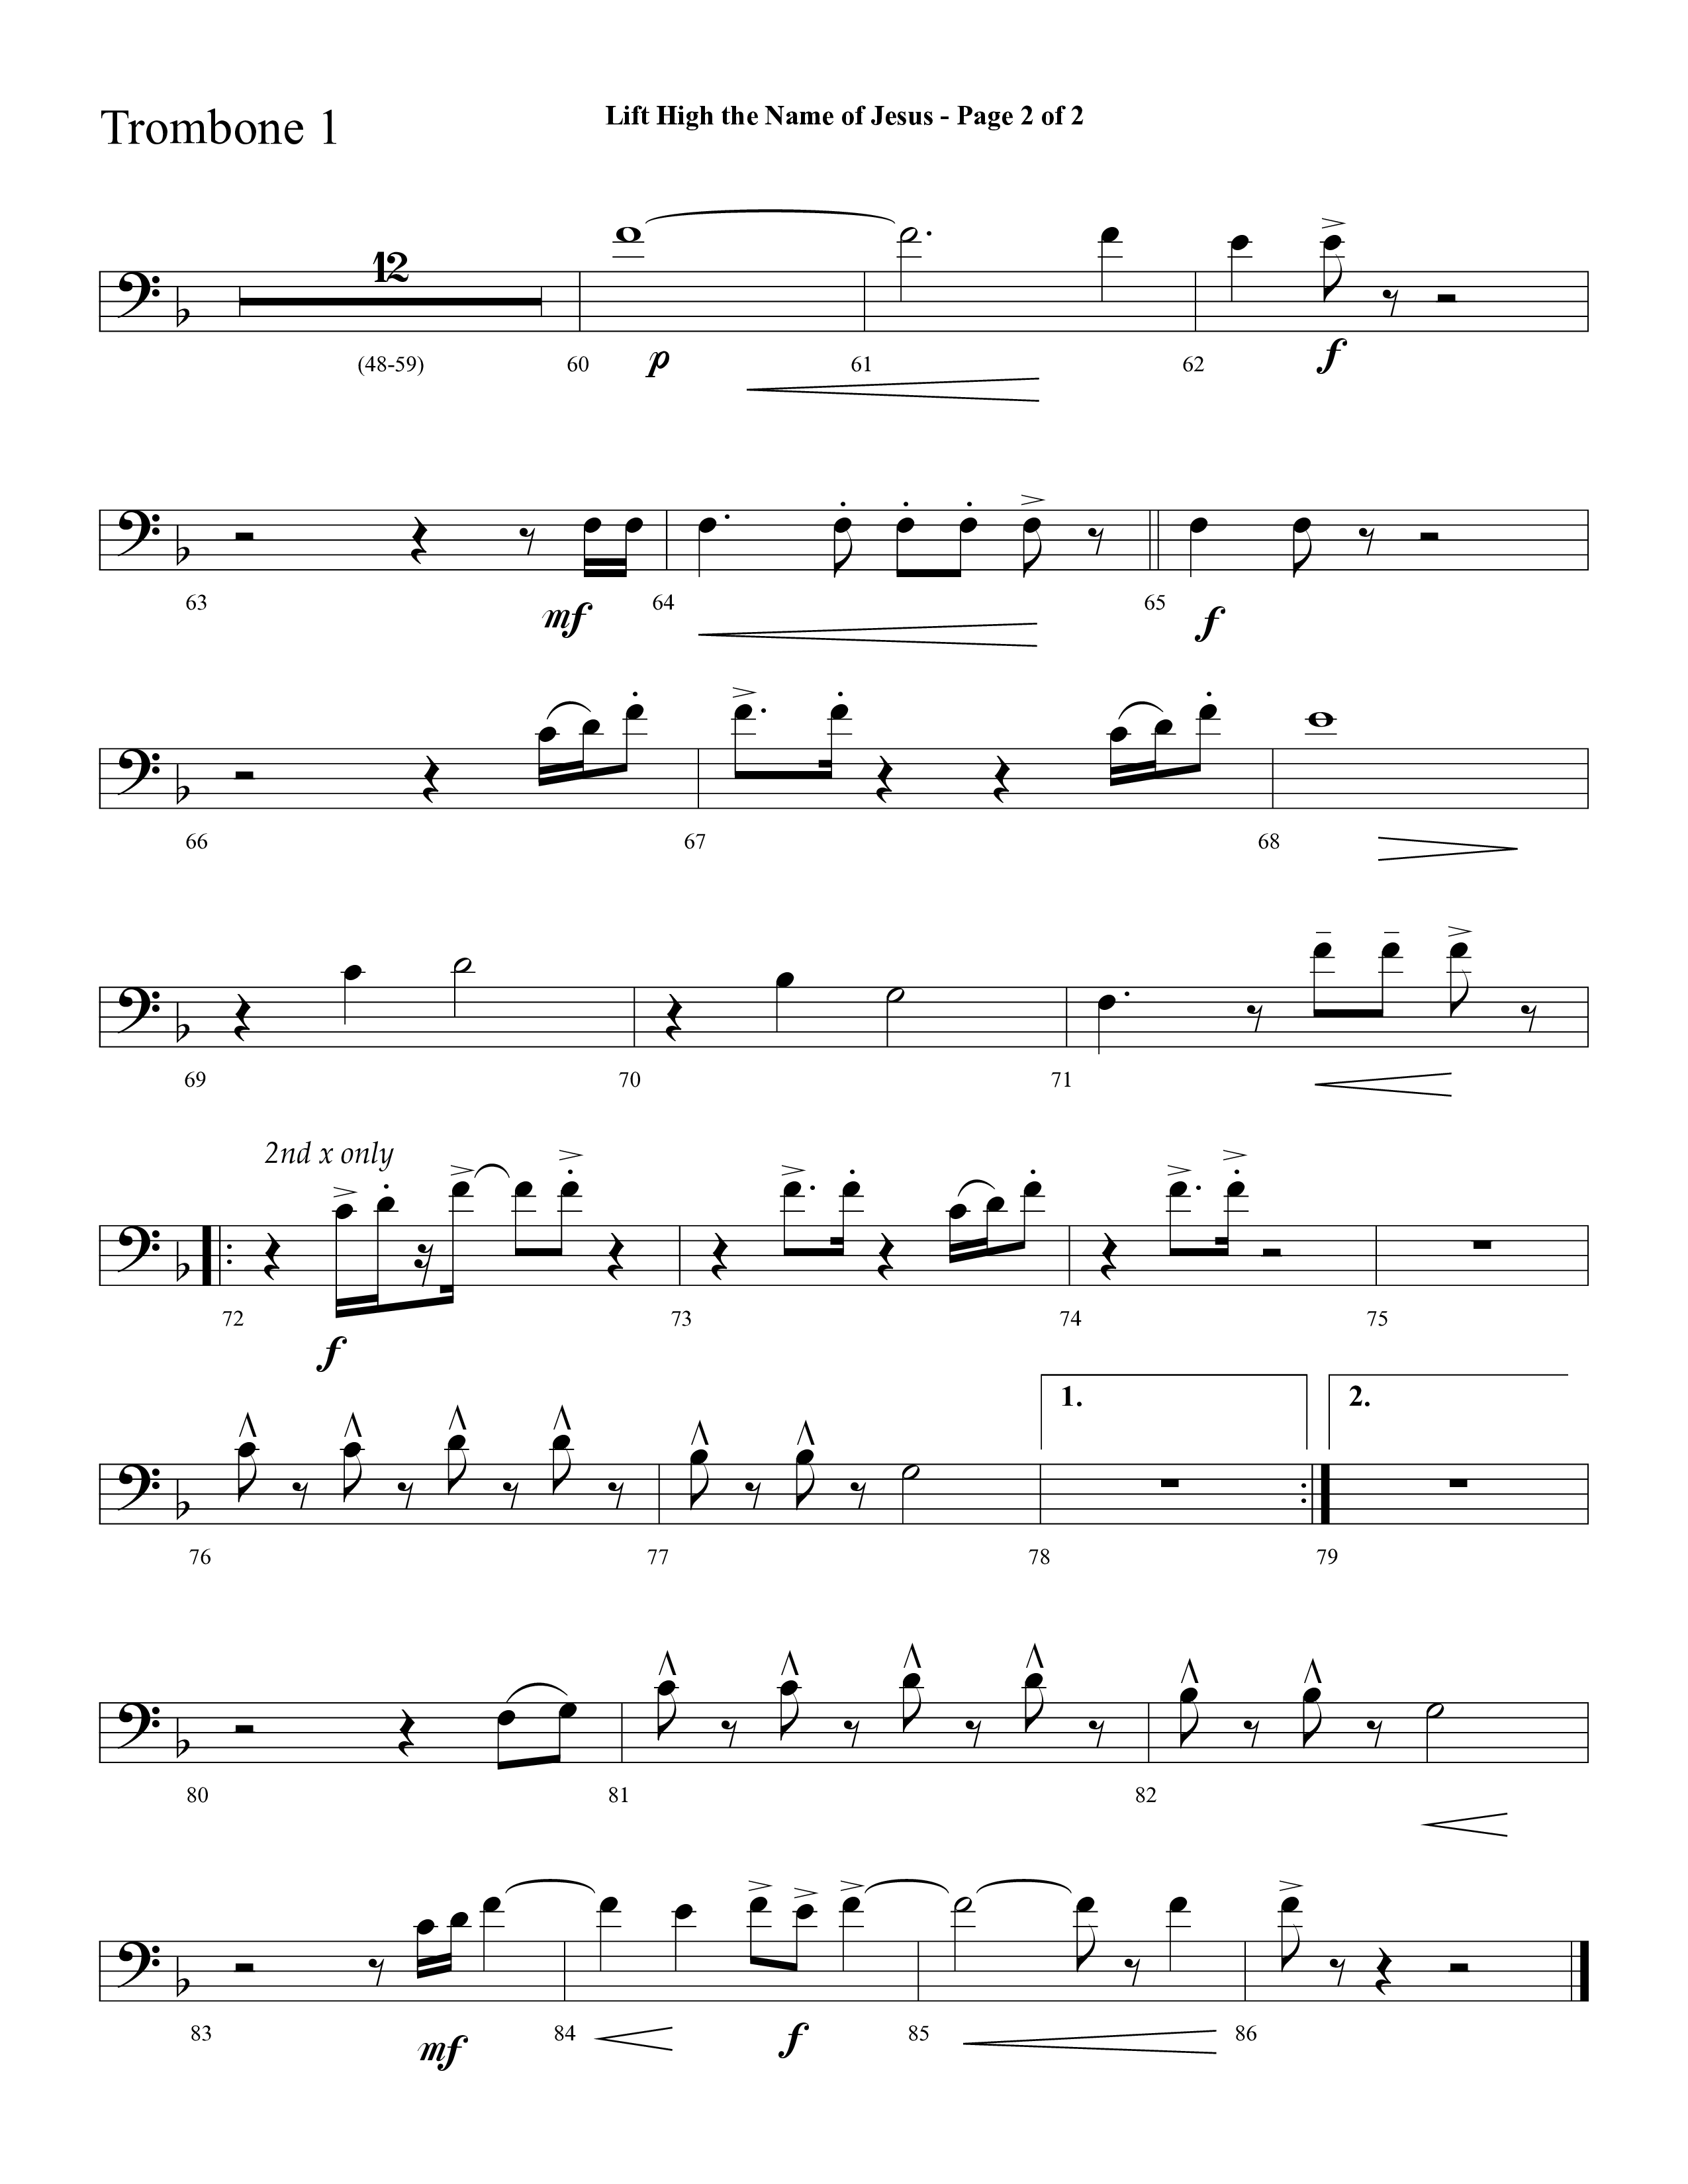 Lift High The Name Of Jesus (Choral Anthem SATB) Trombone 1/2/3 (Lifeway Choral / Arr. David Hamilton)